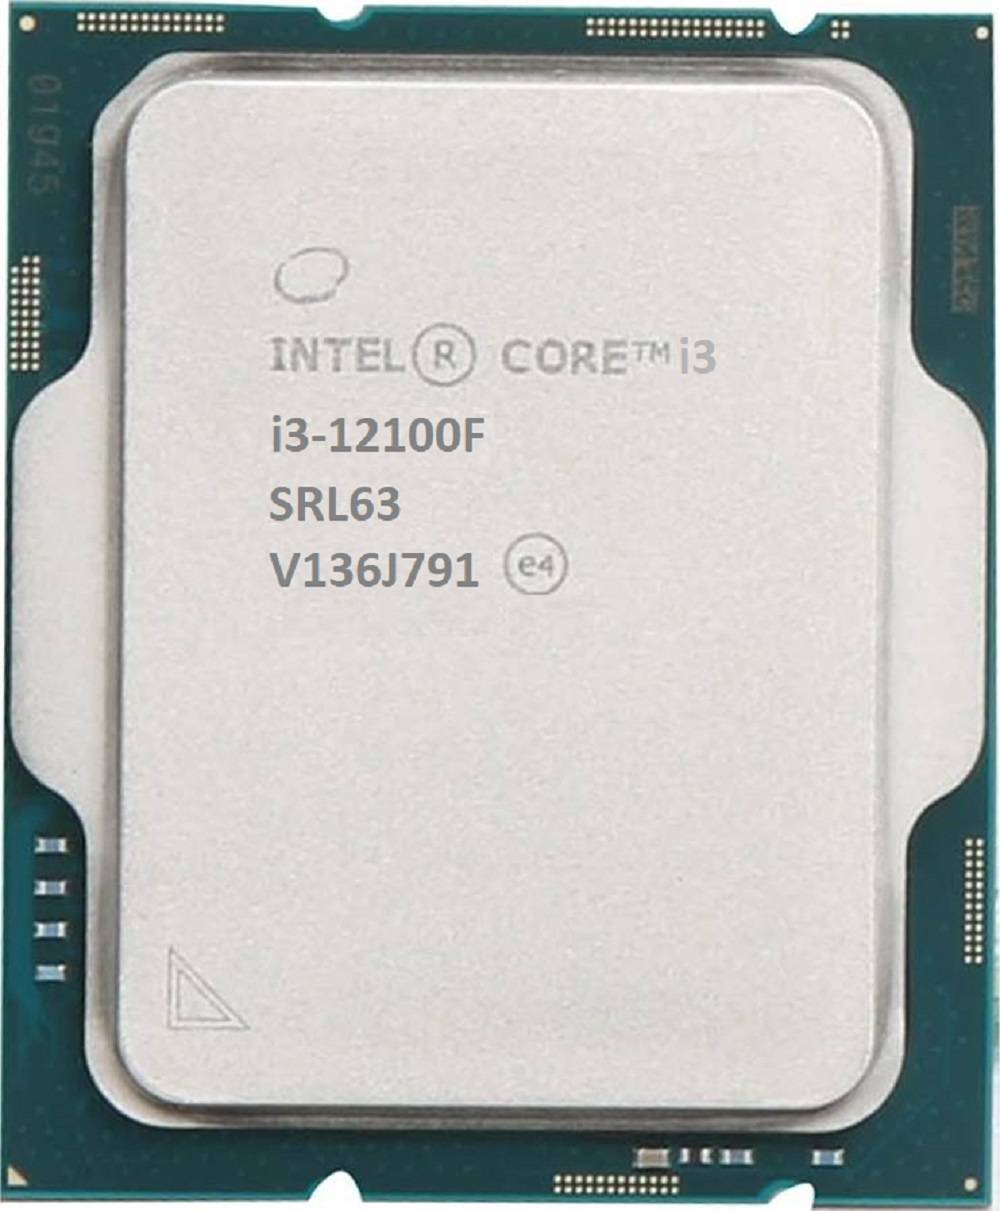 Intel Core i3 12100F 4-Core CPU - Brand New